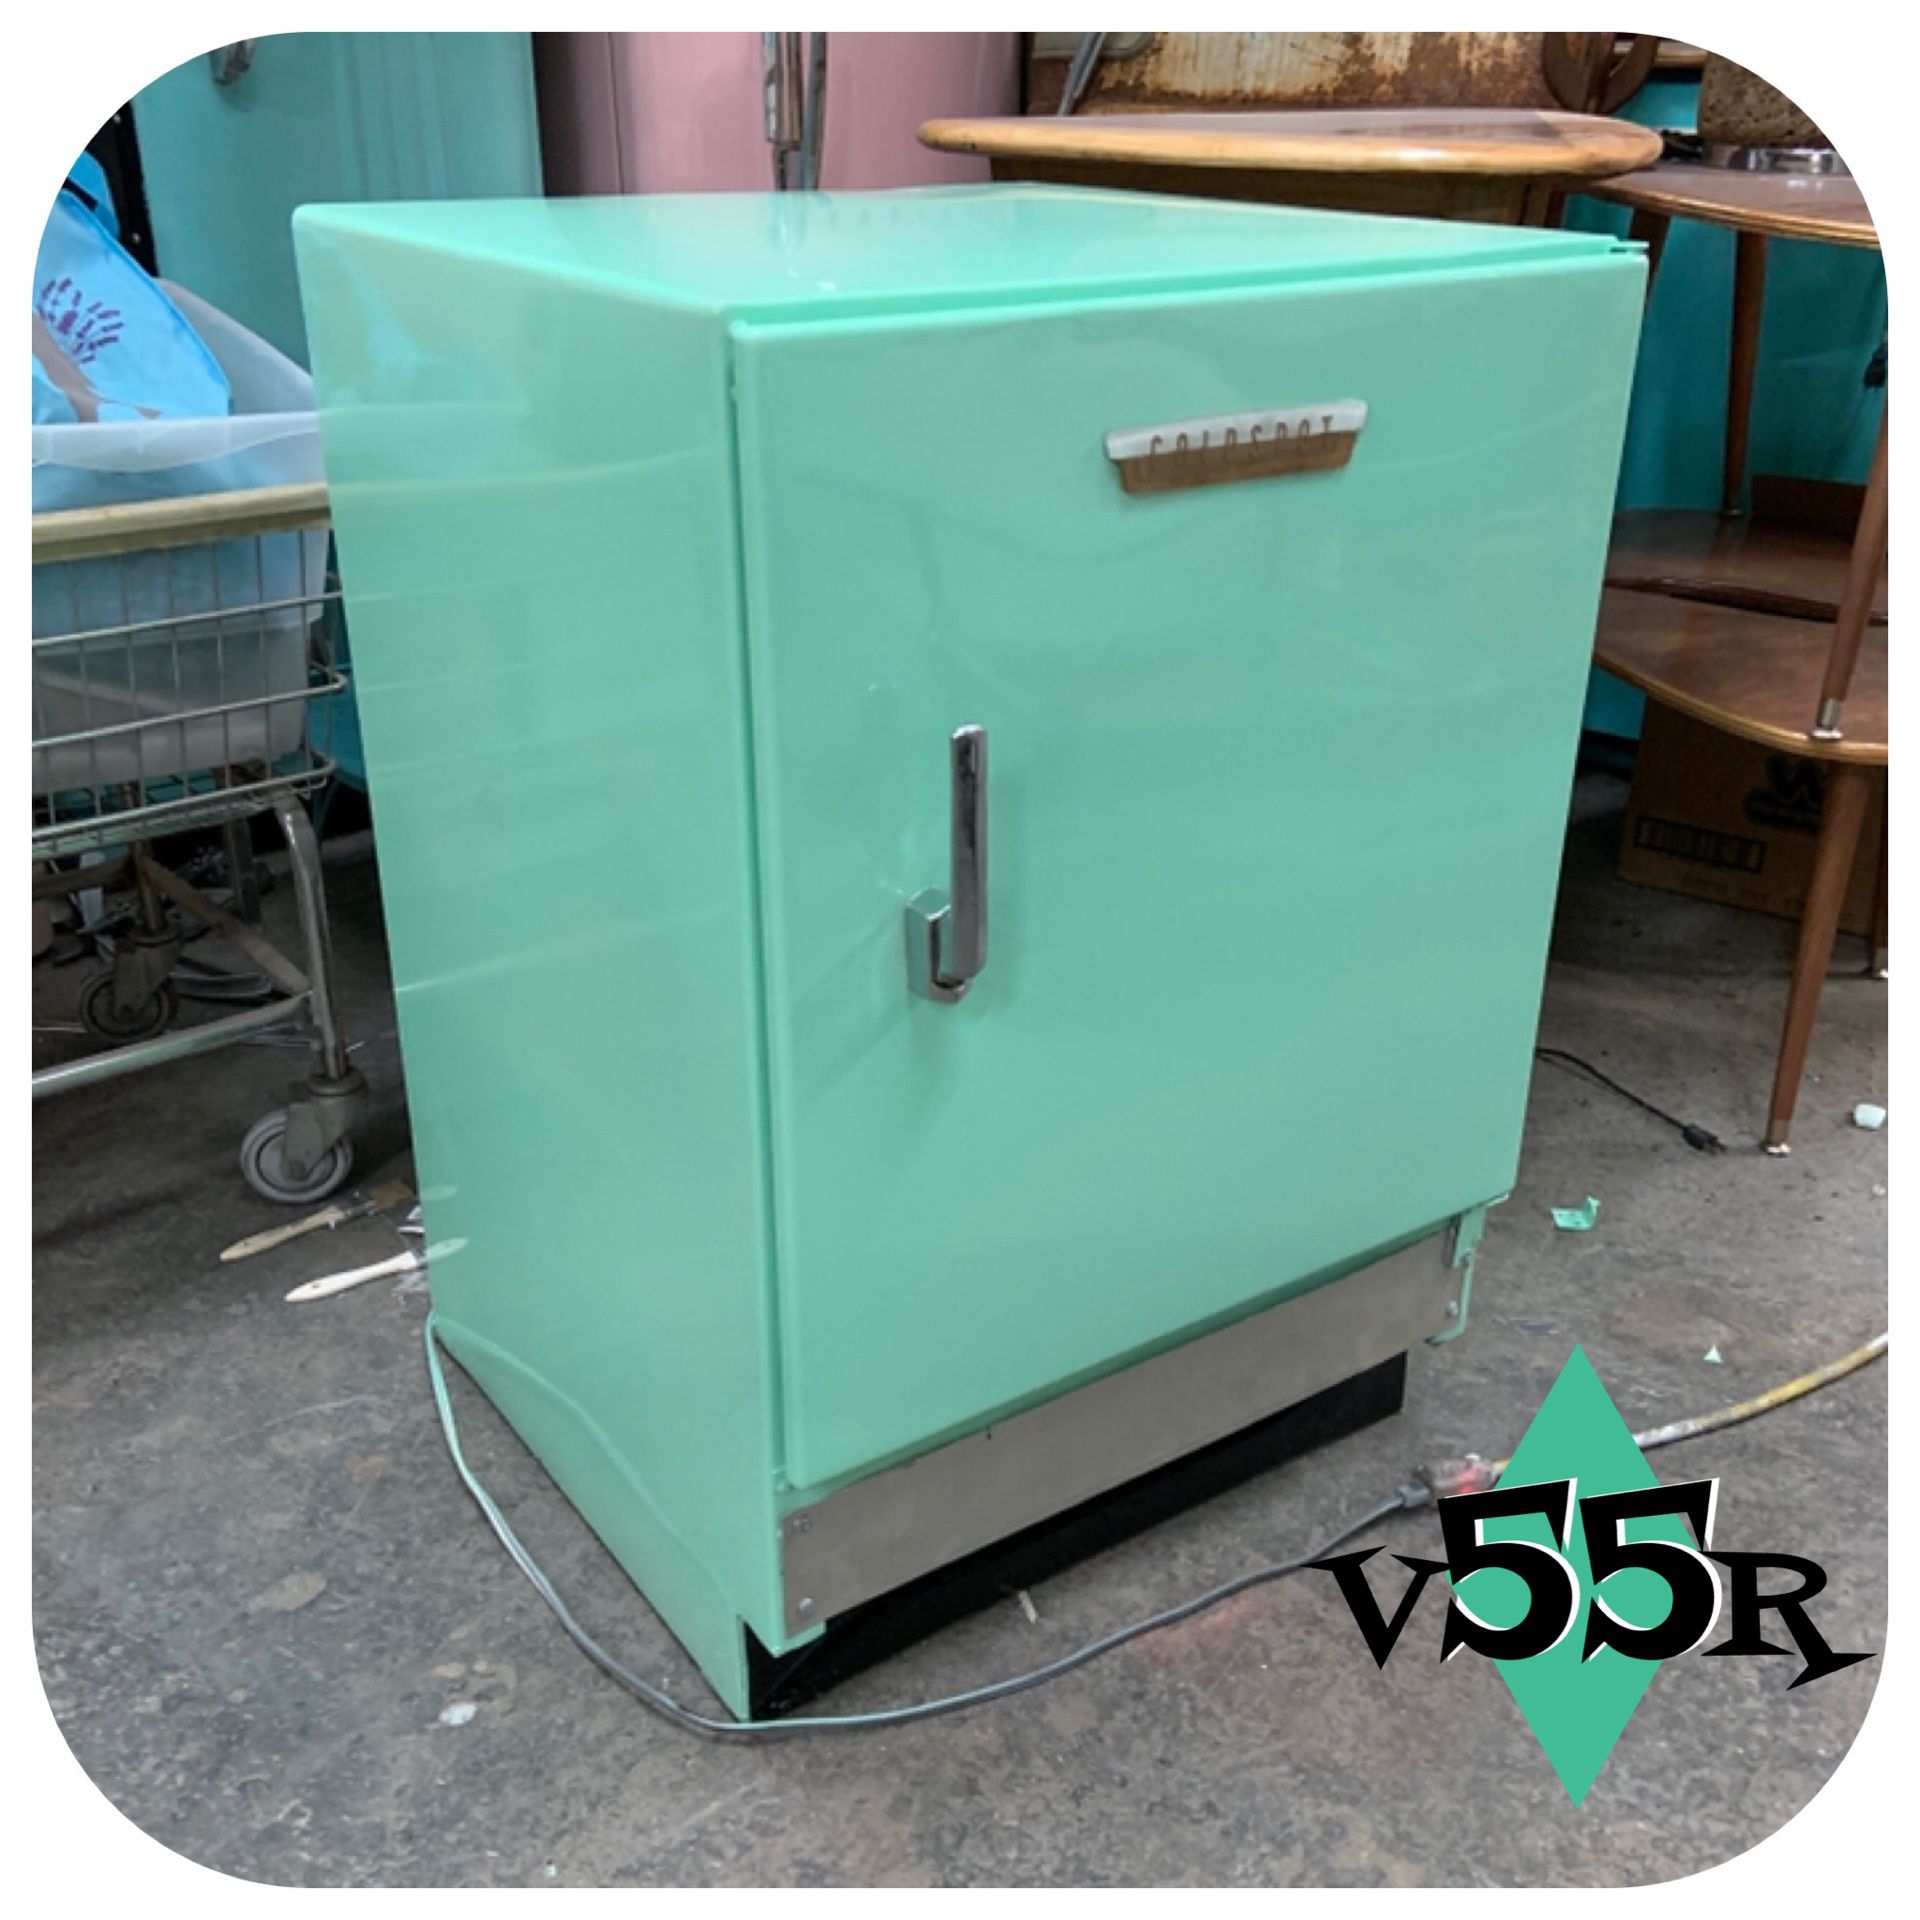 Vintage refrigerator mini fridge vintage trailer refrigerator